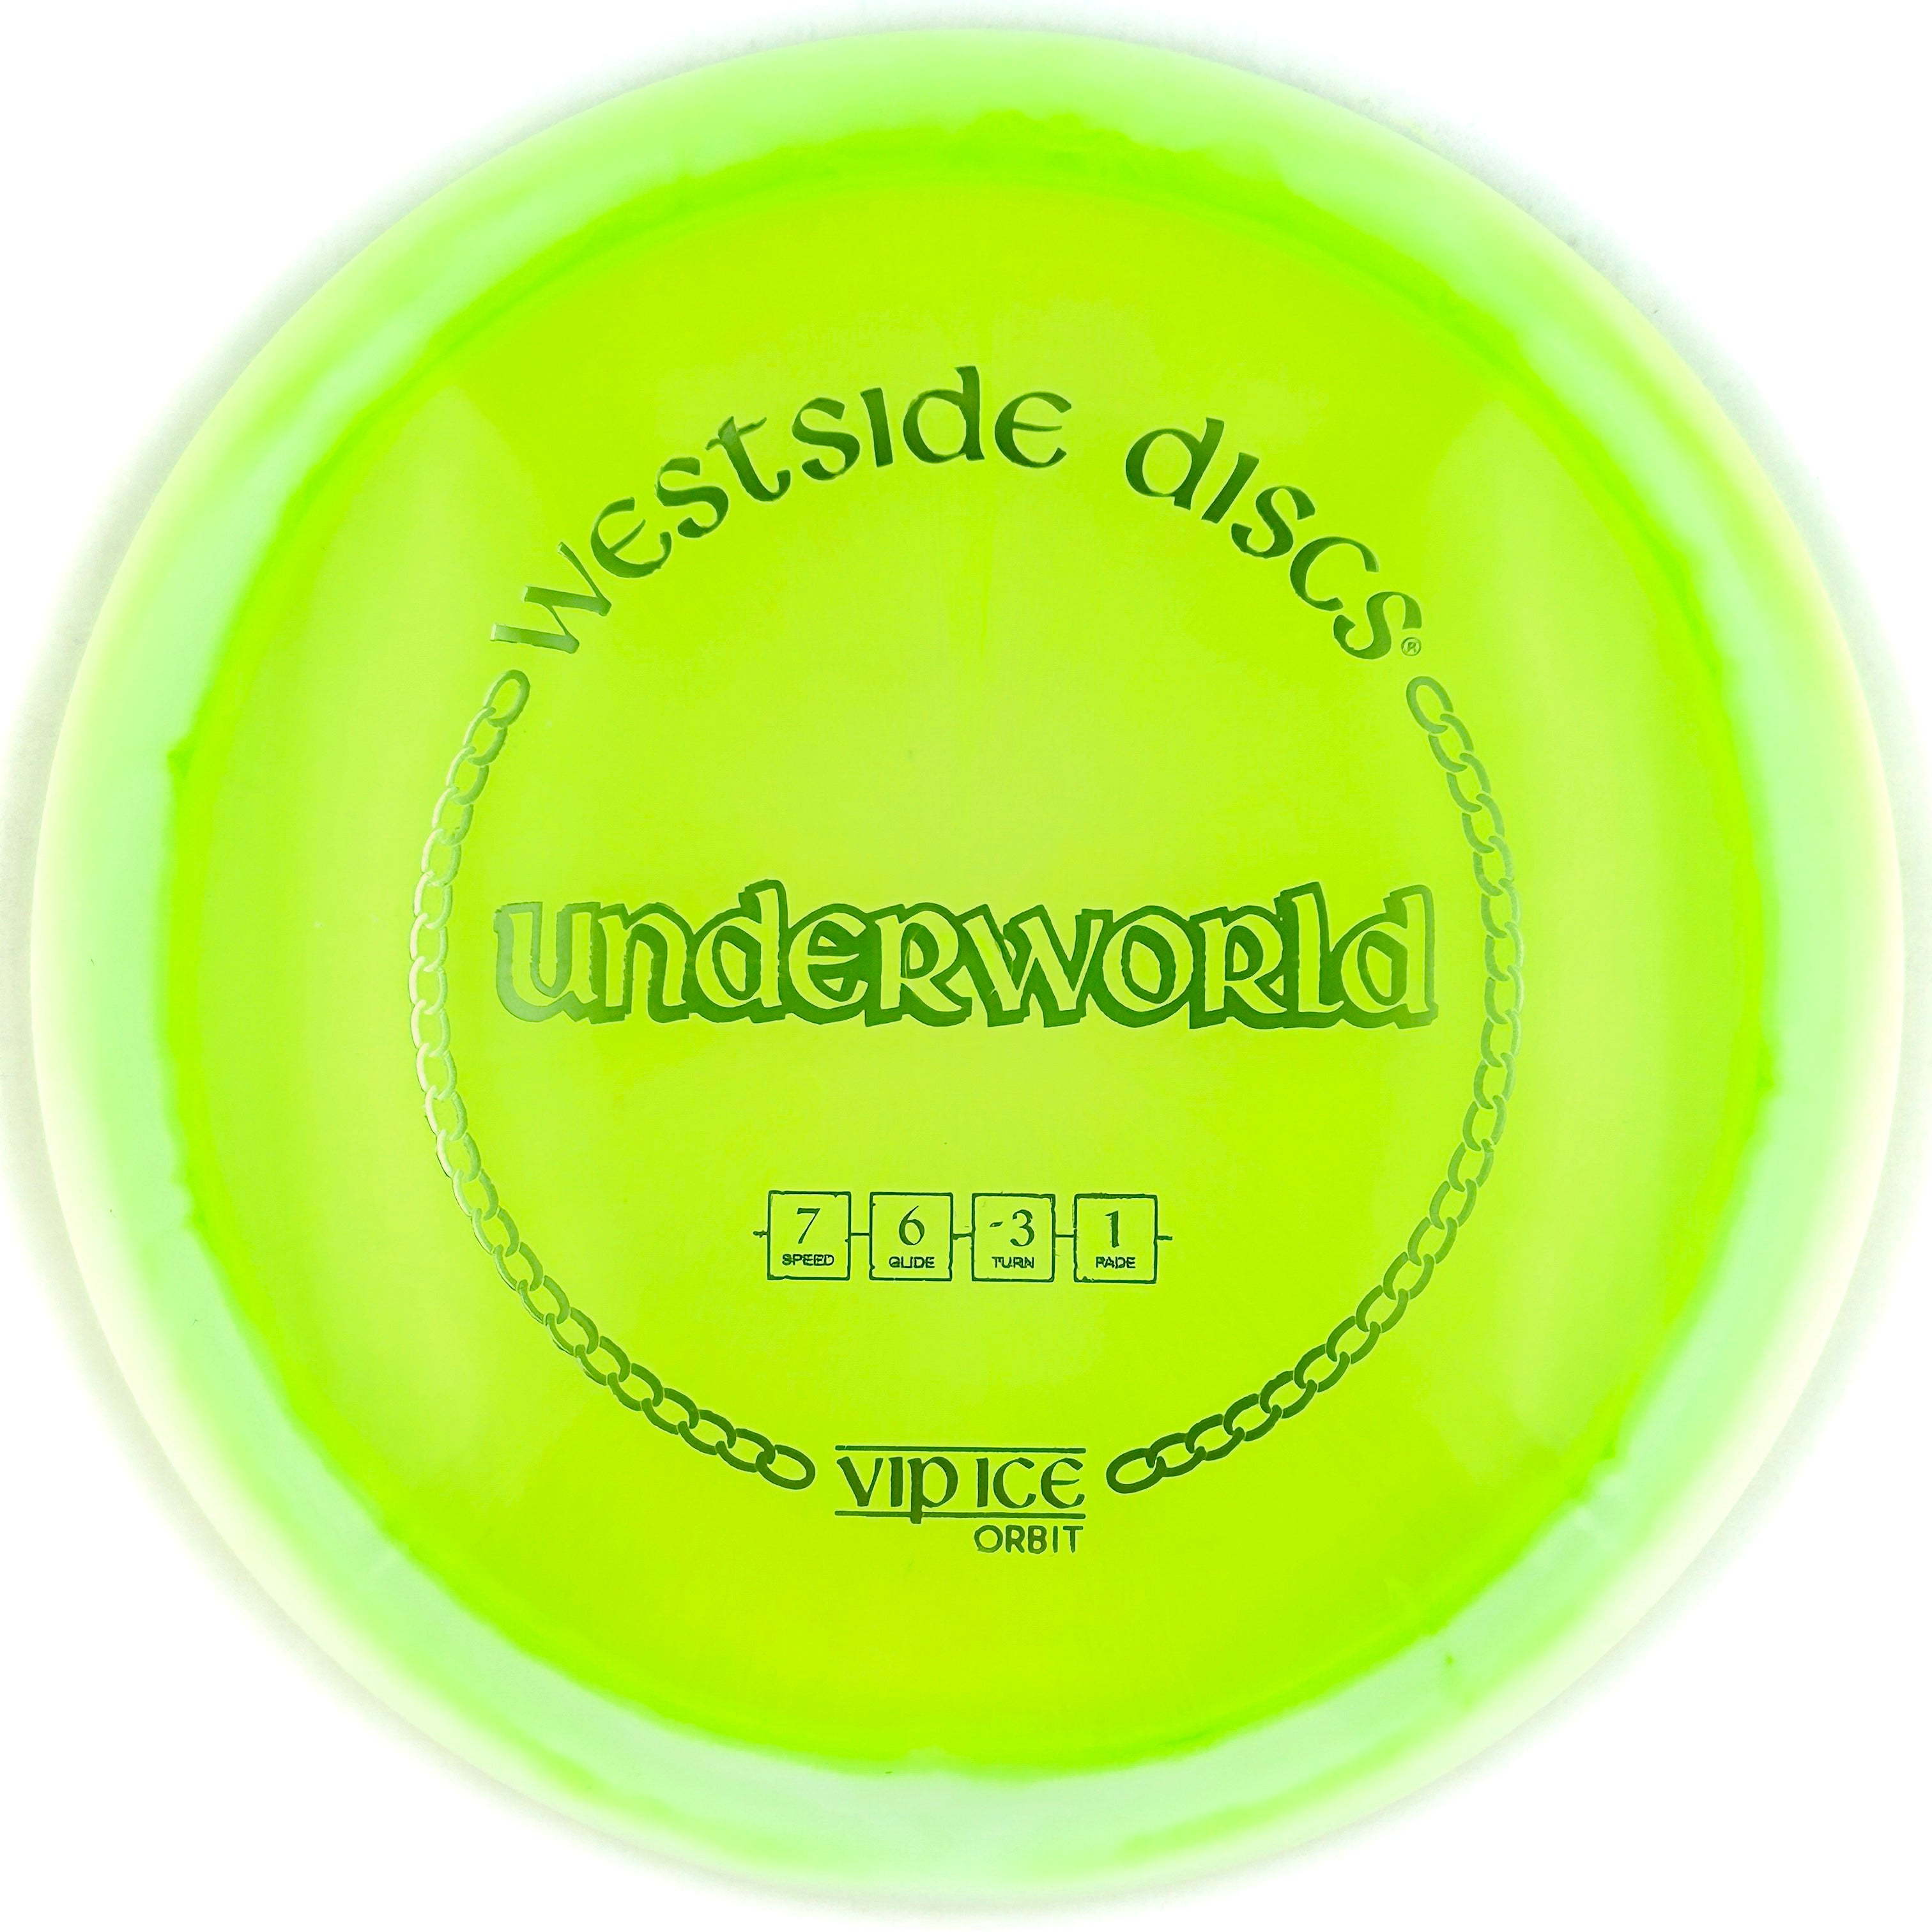 Westside Discs VIP Ice-Orbit Underworld (Fairway Driver)